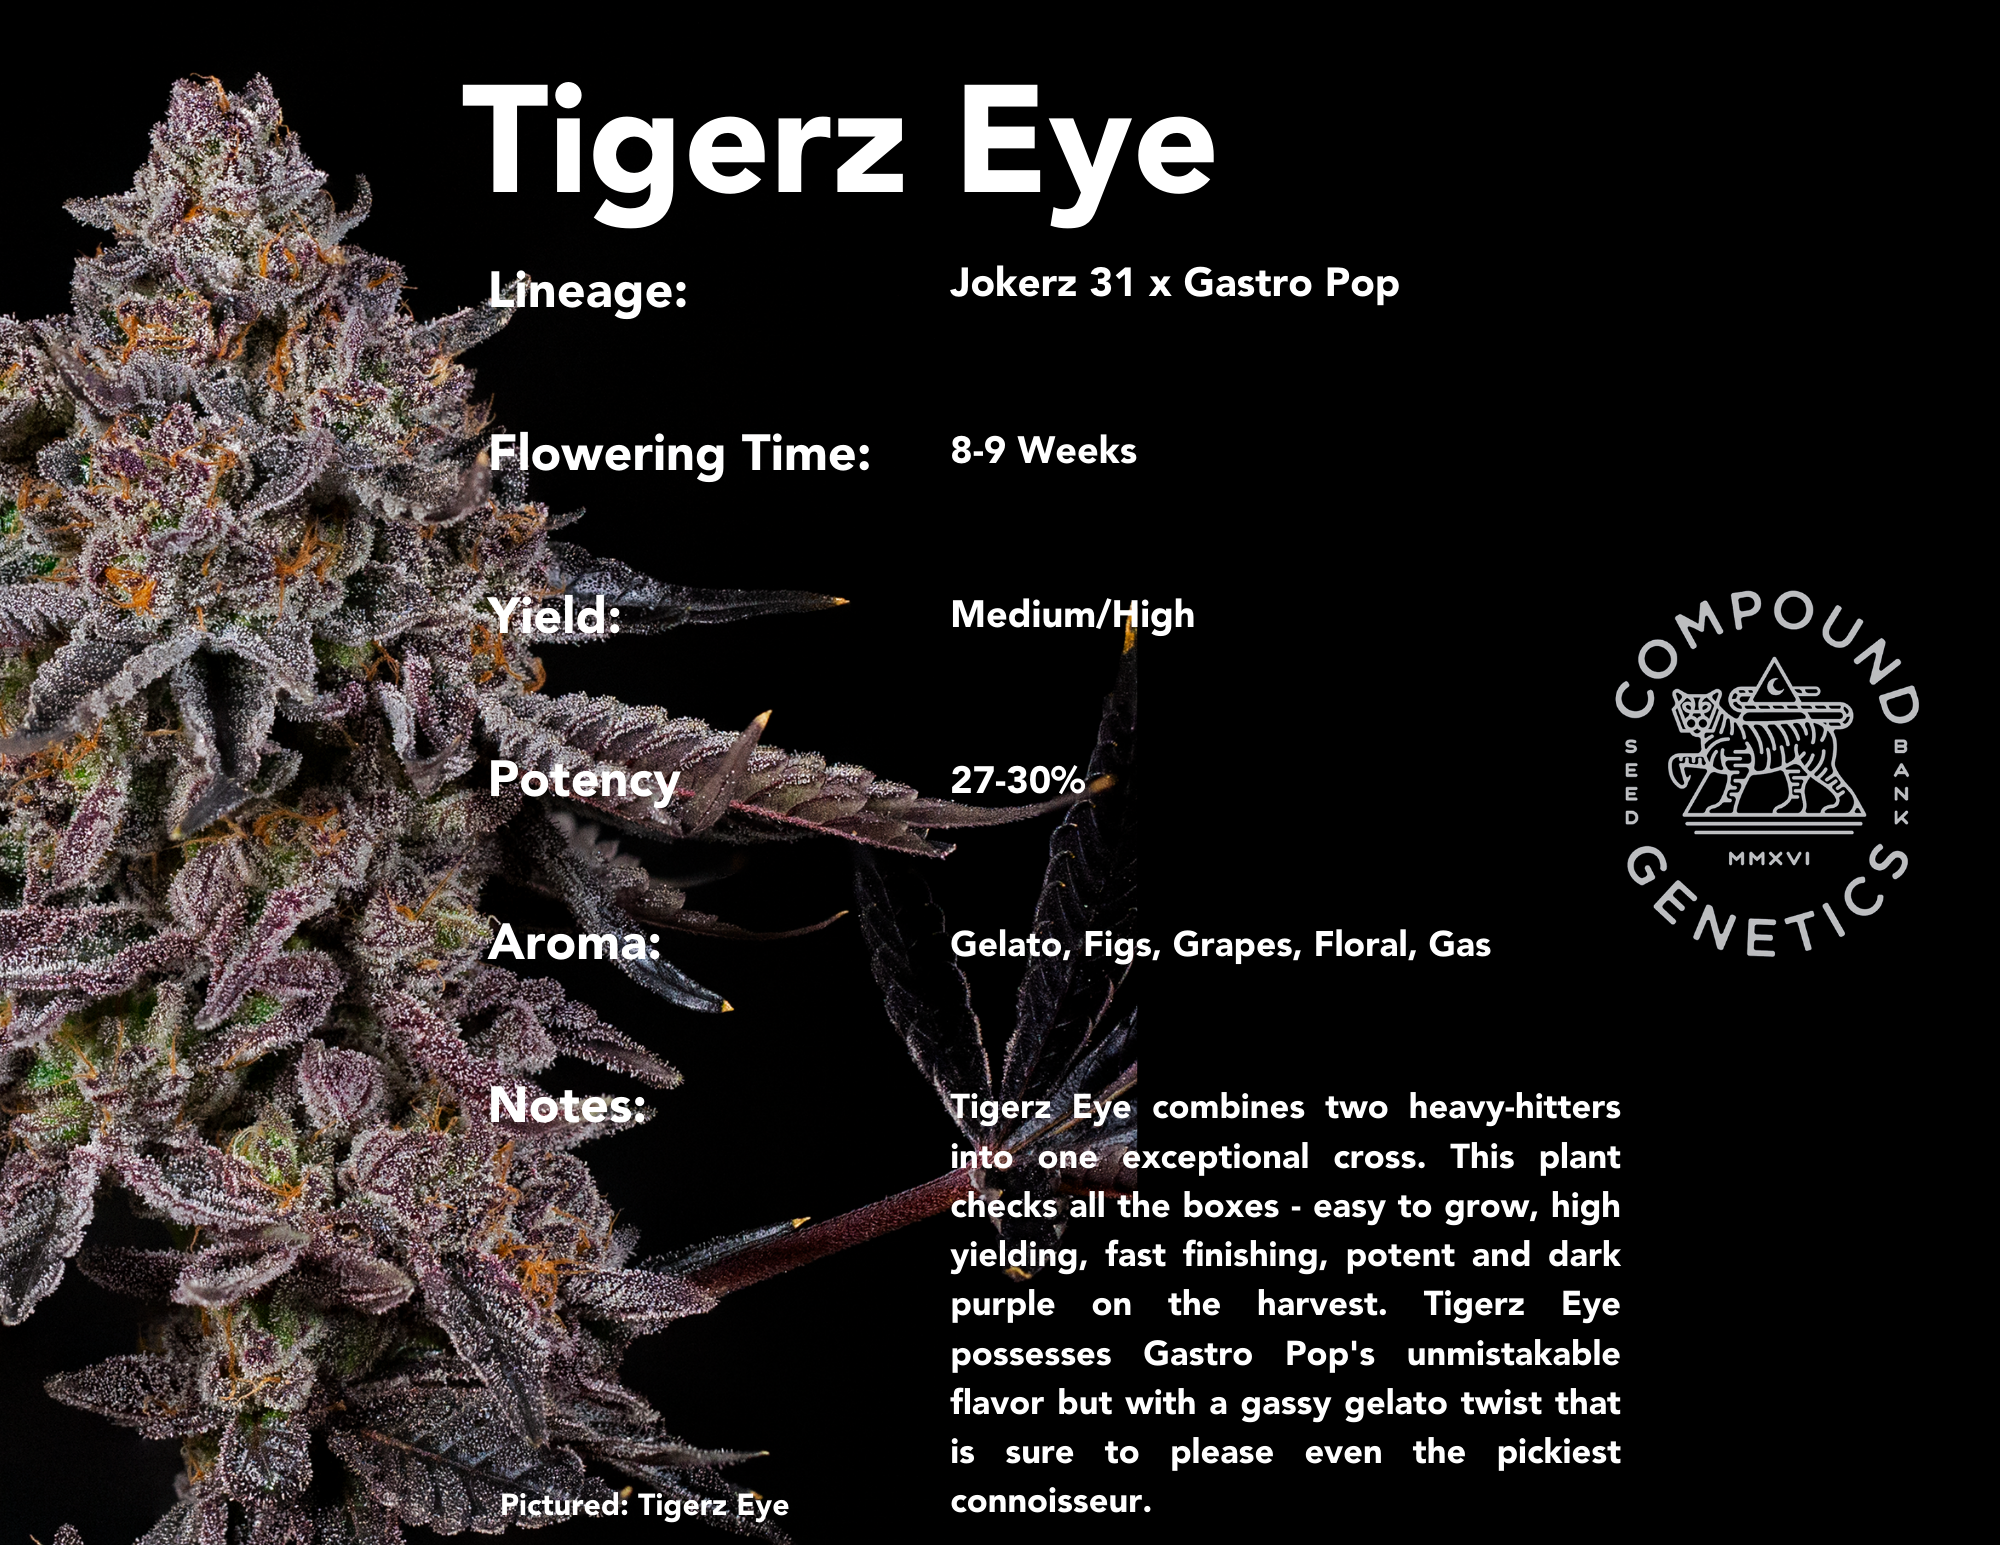 Tigerz Eye bred by Compound Genetics